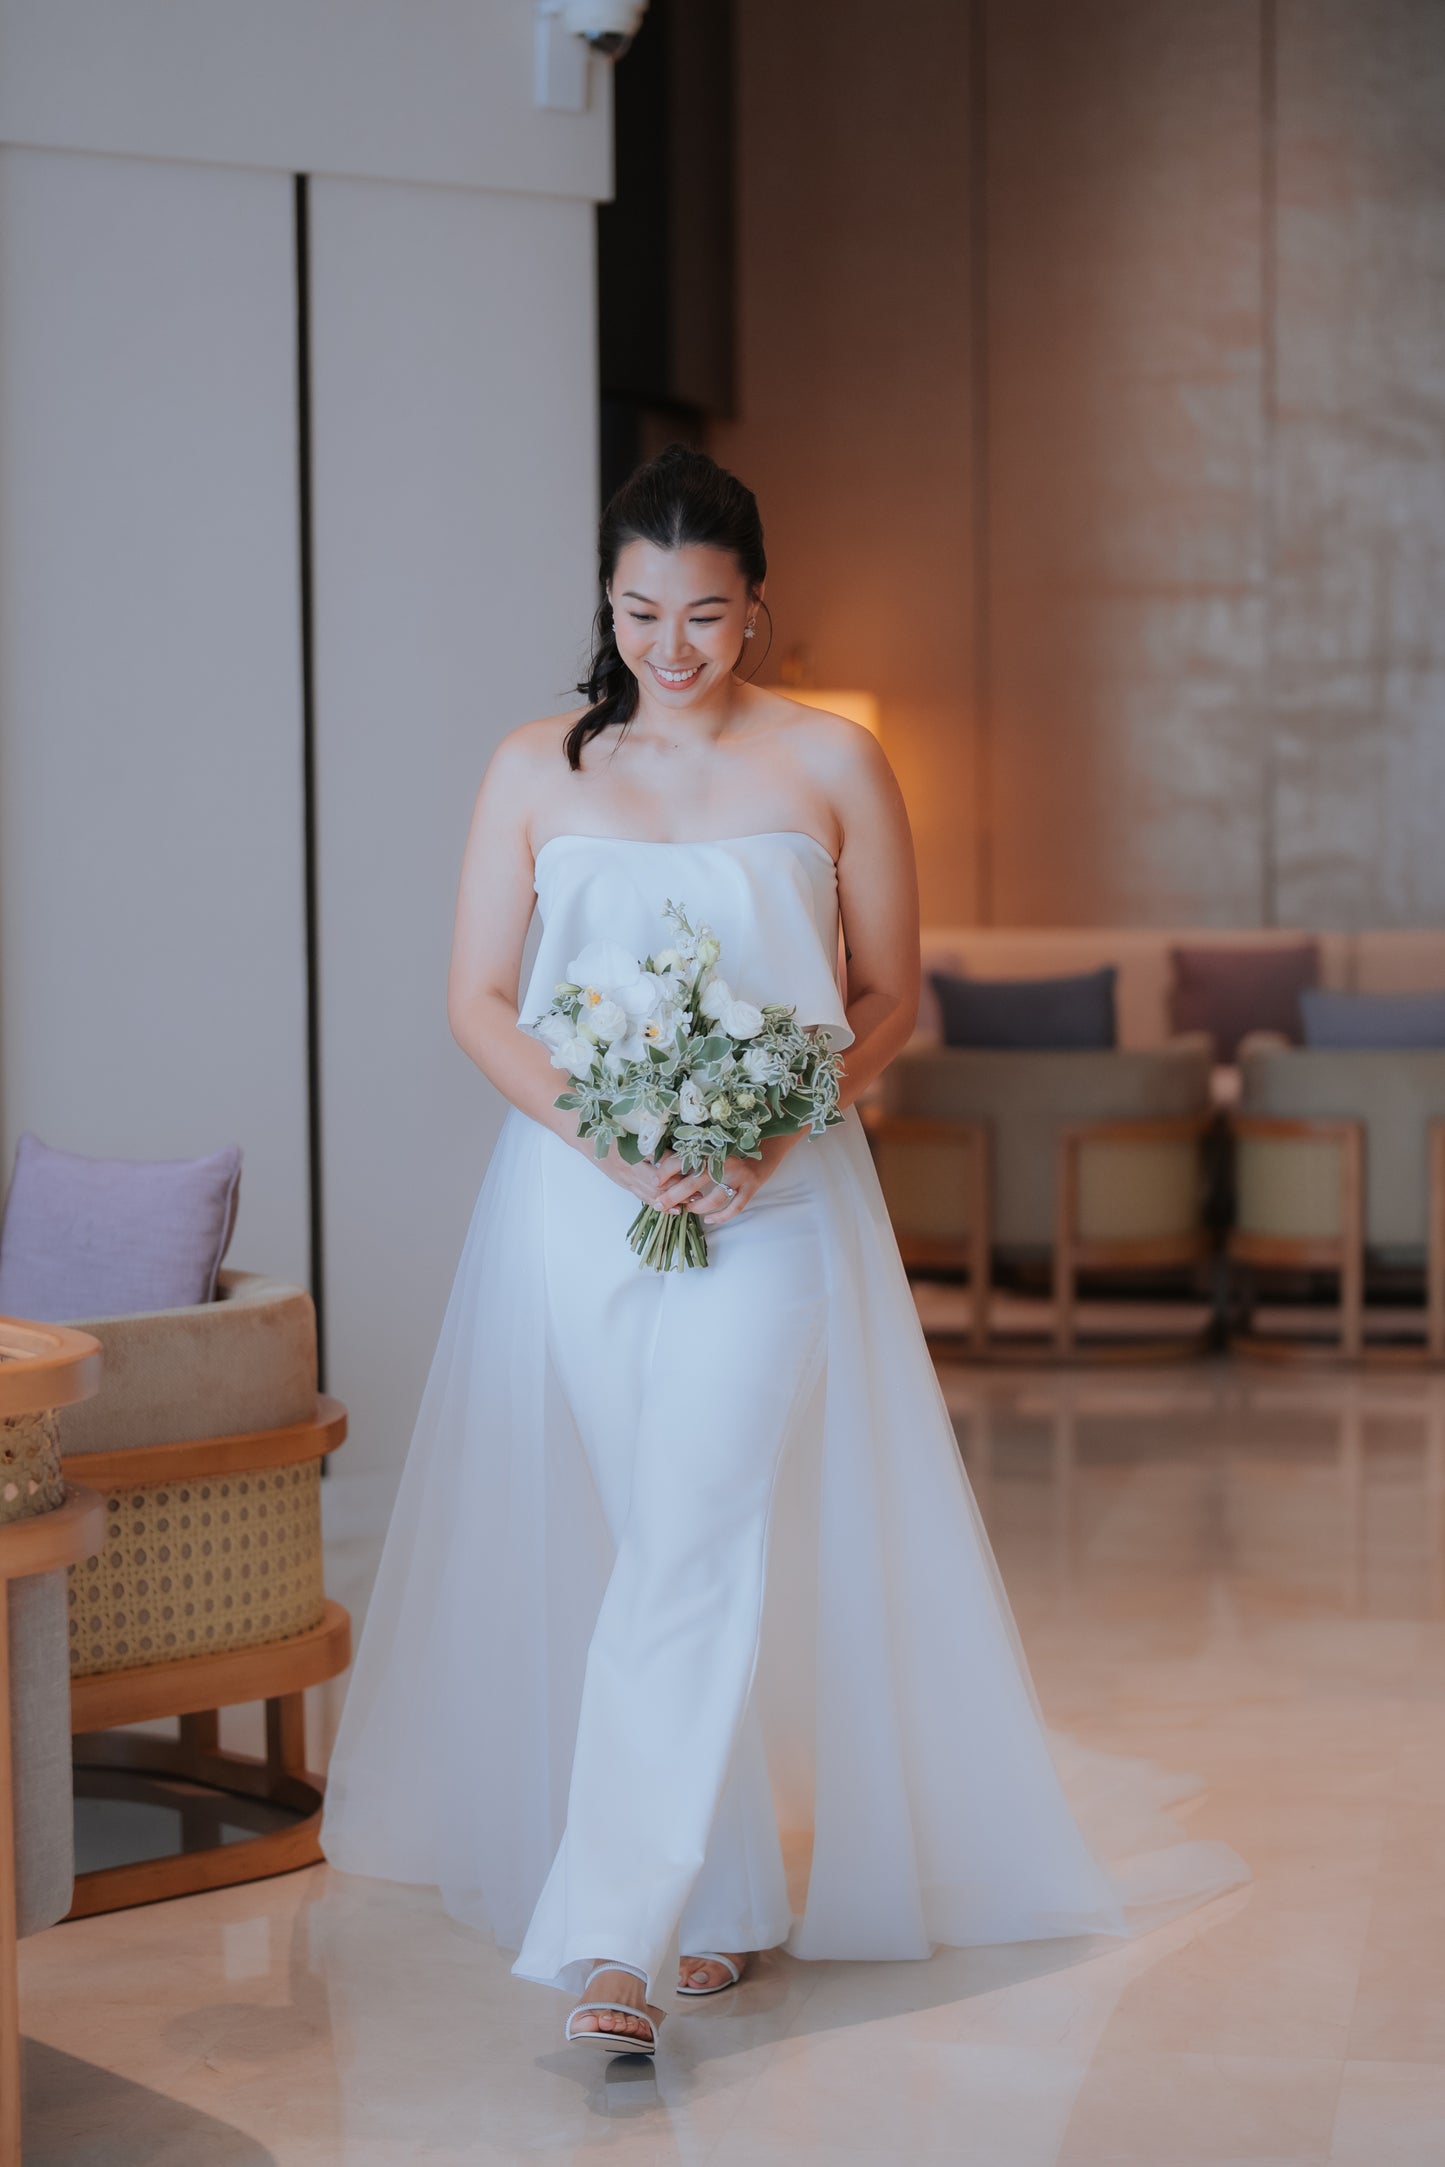 Daring Elegance: Audrey's Jumpsuit Bridal Gown